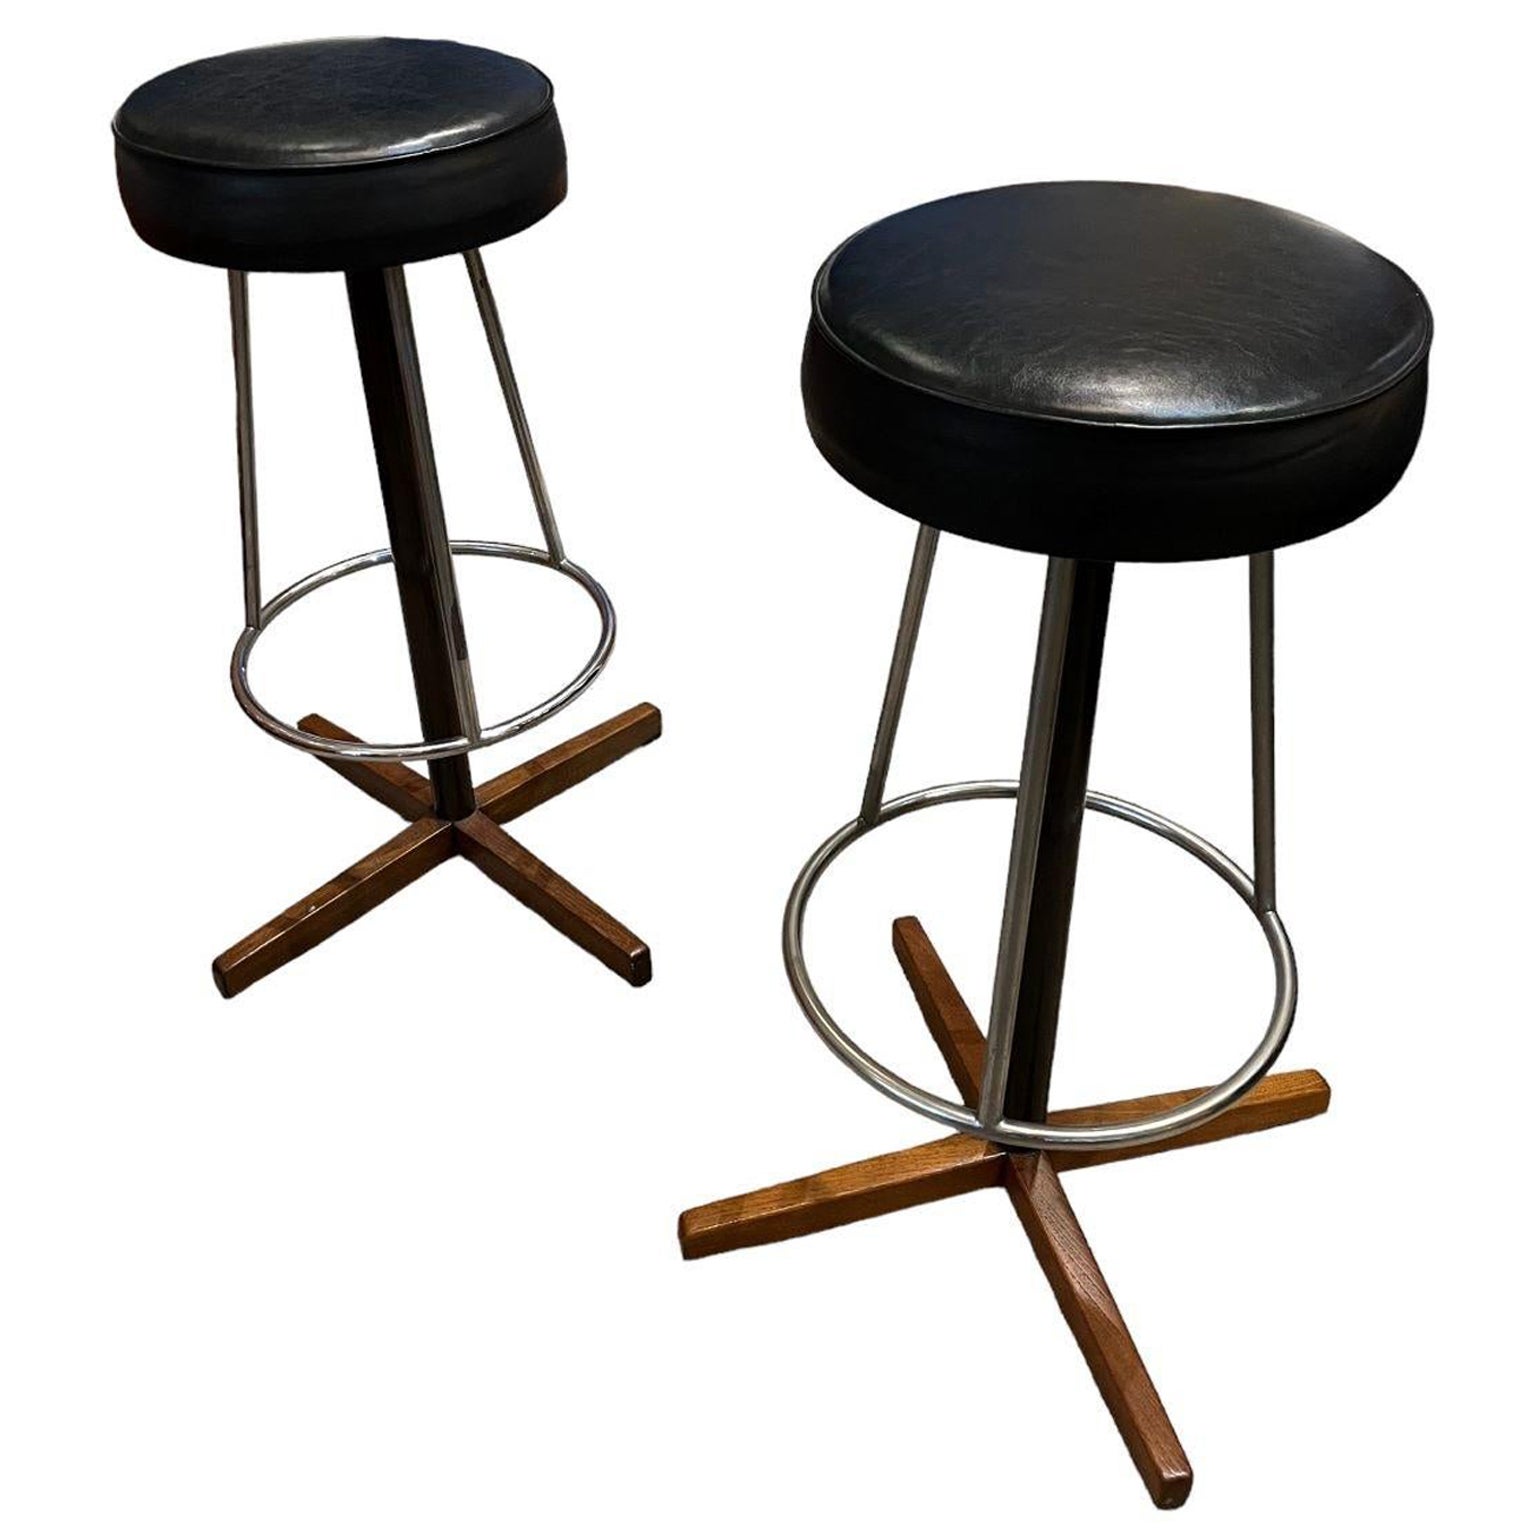 Pair Of Borje Johanson Teak & Chrome bar stools for Johanson Design.